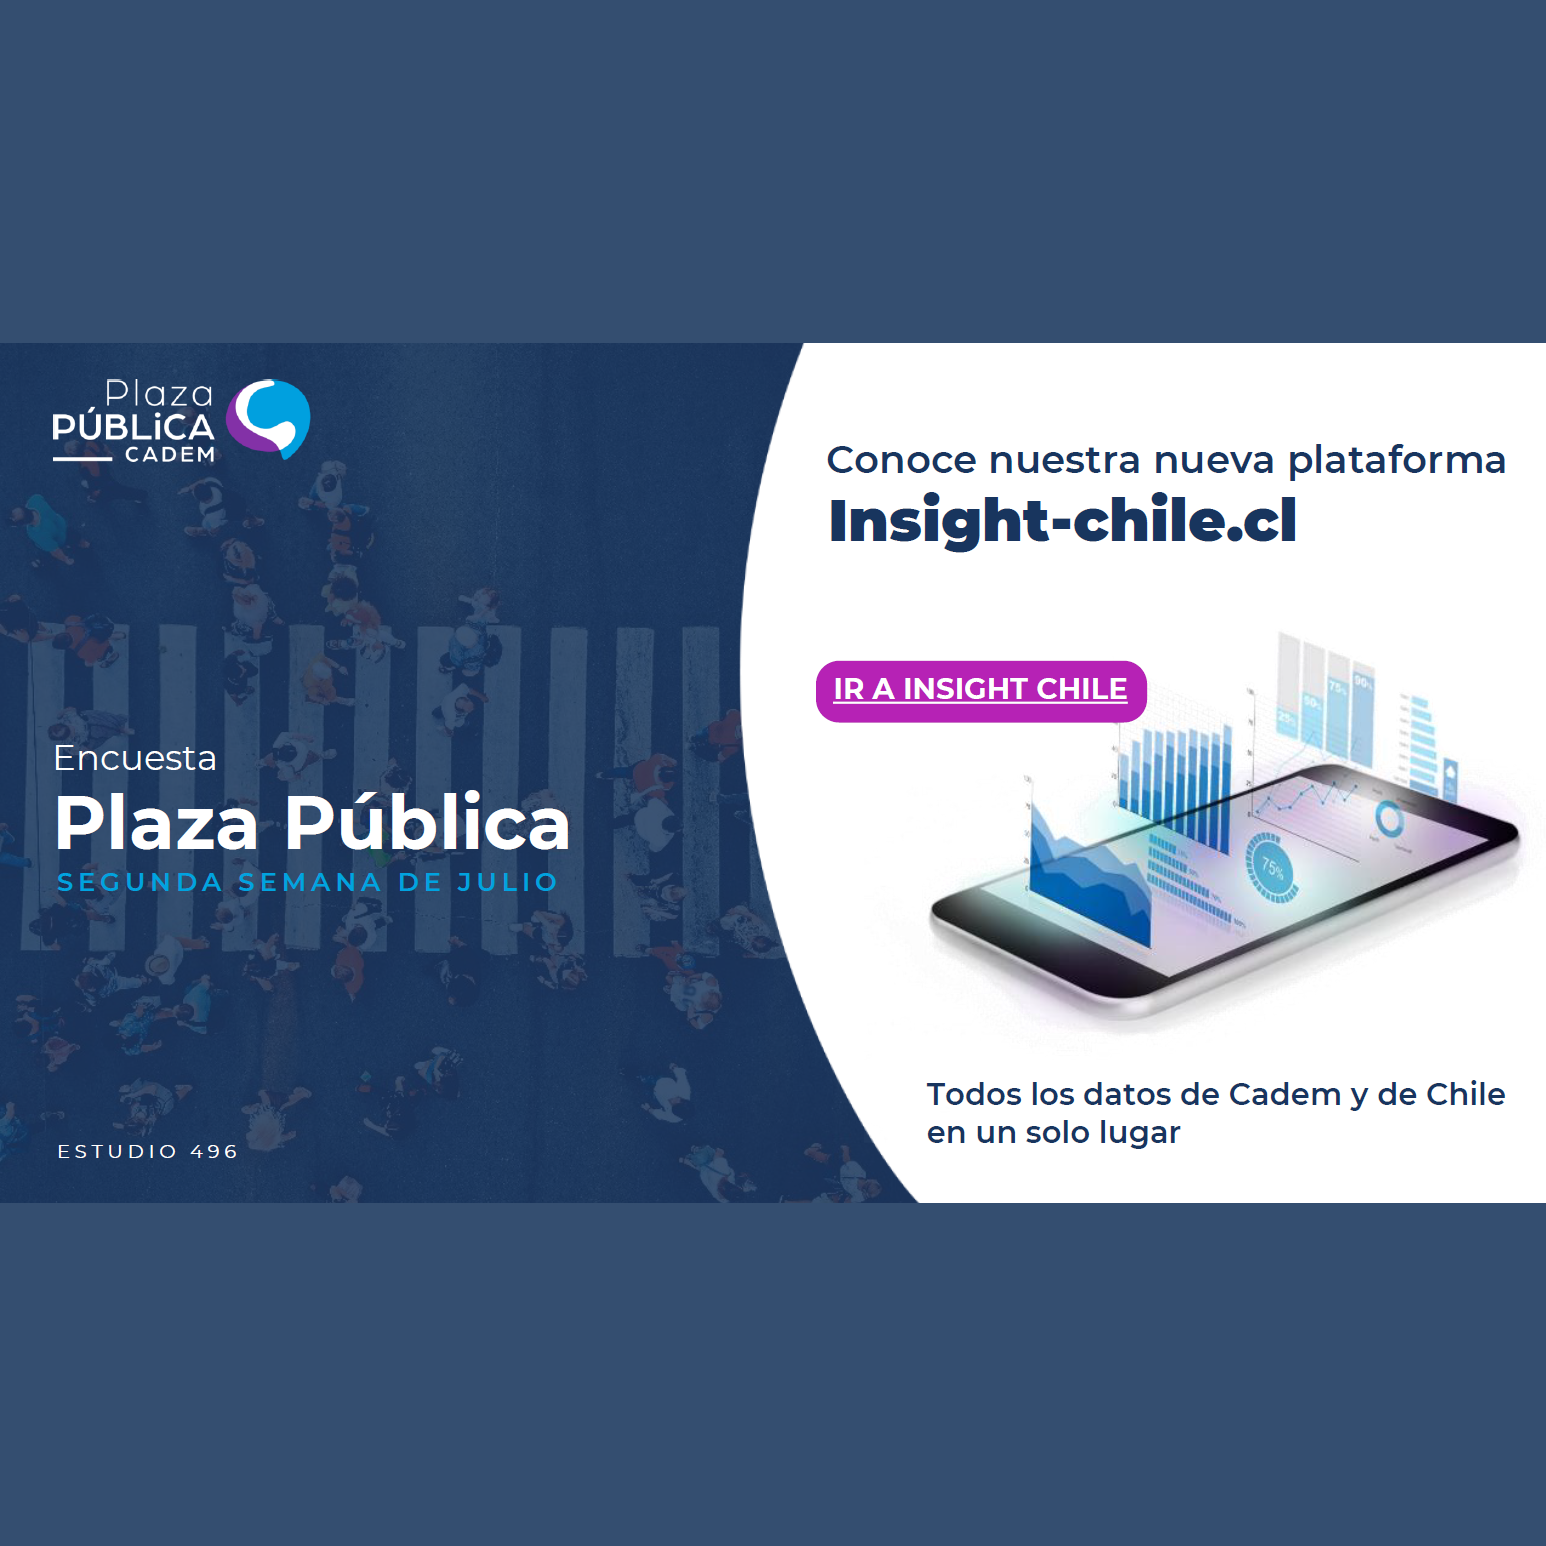 Encuesta Plaza Pública – 2da semana de julio